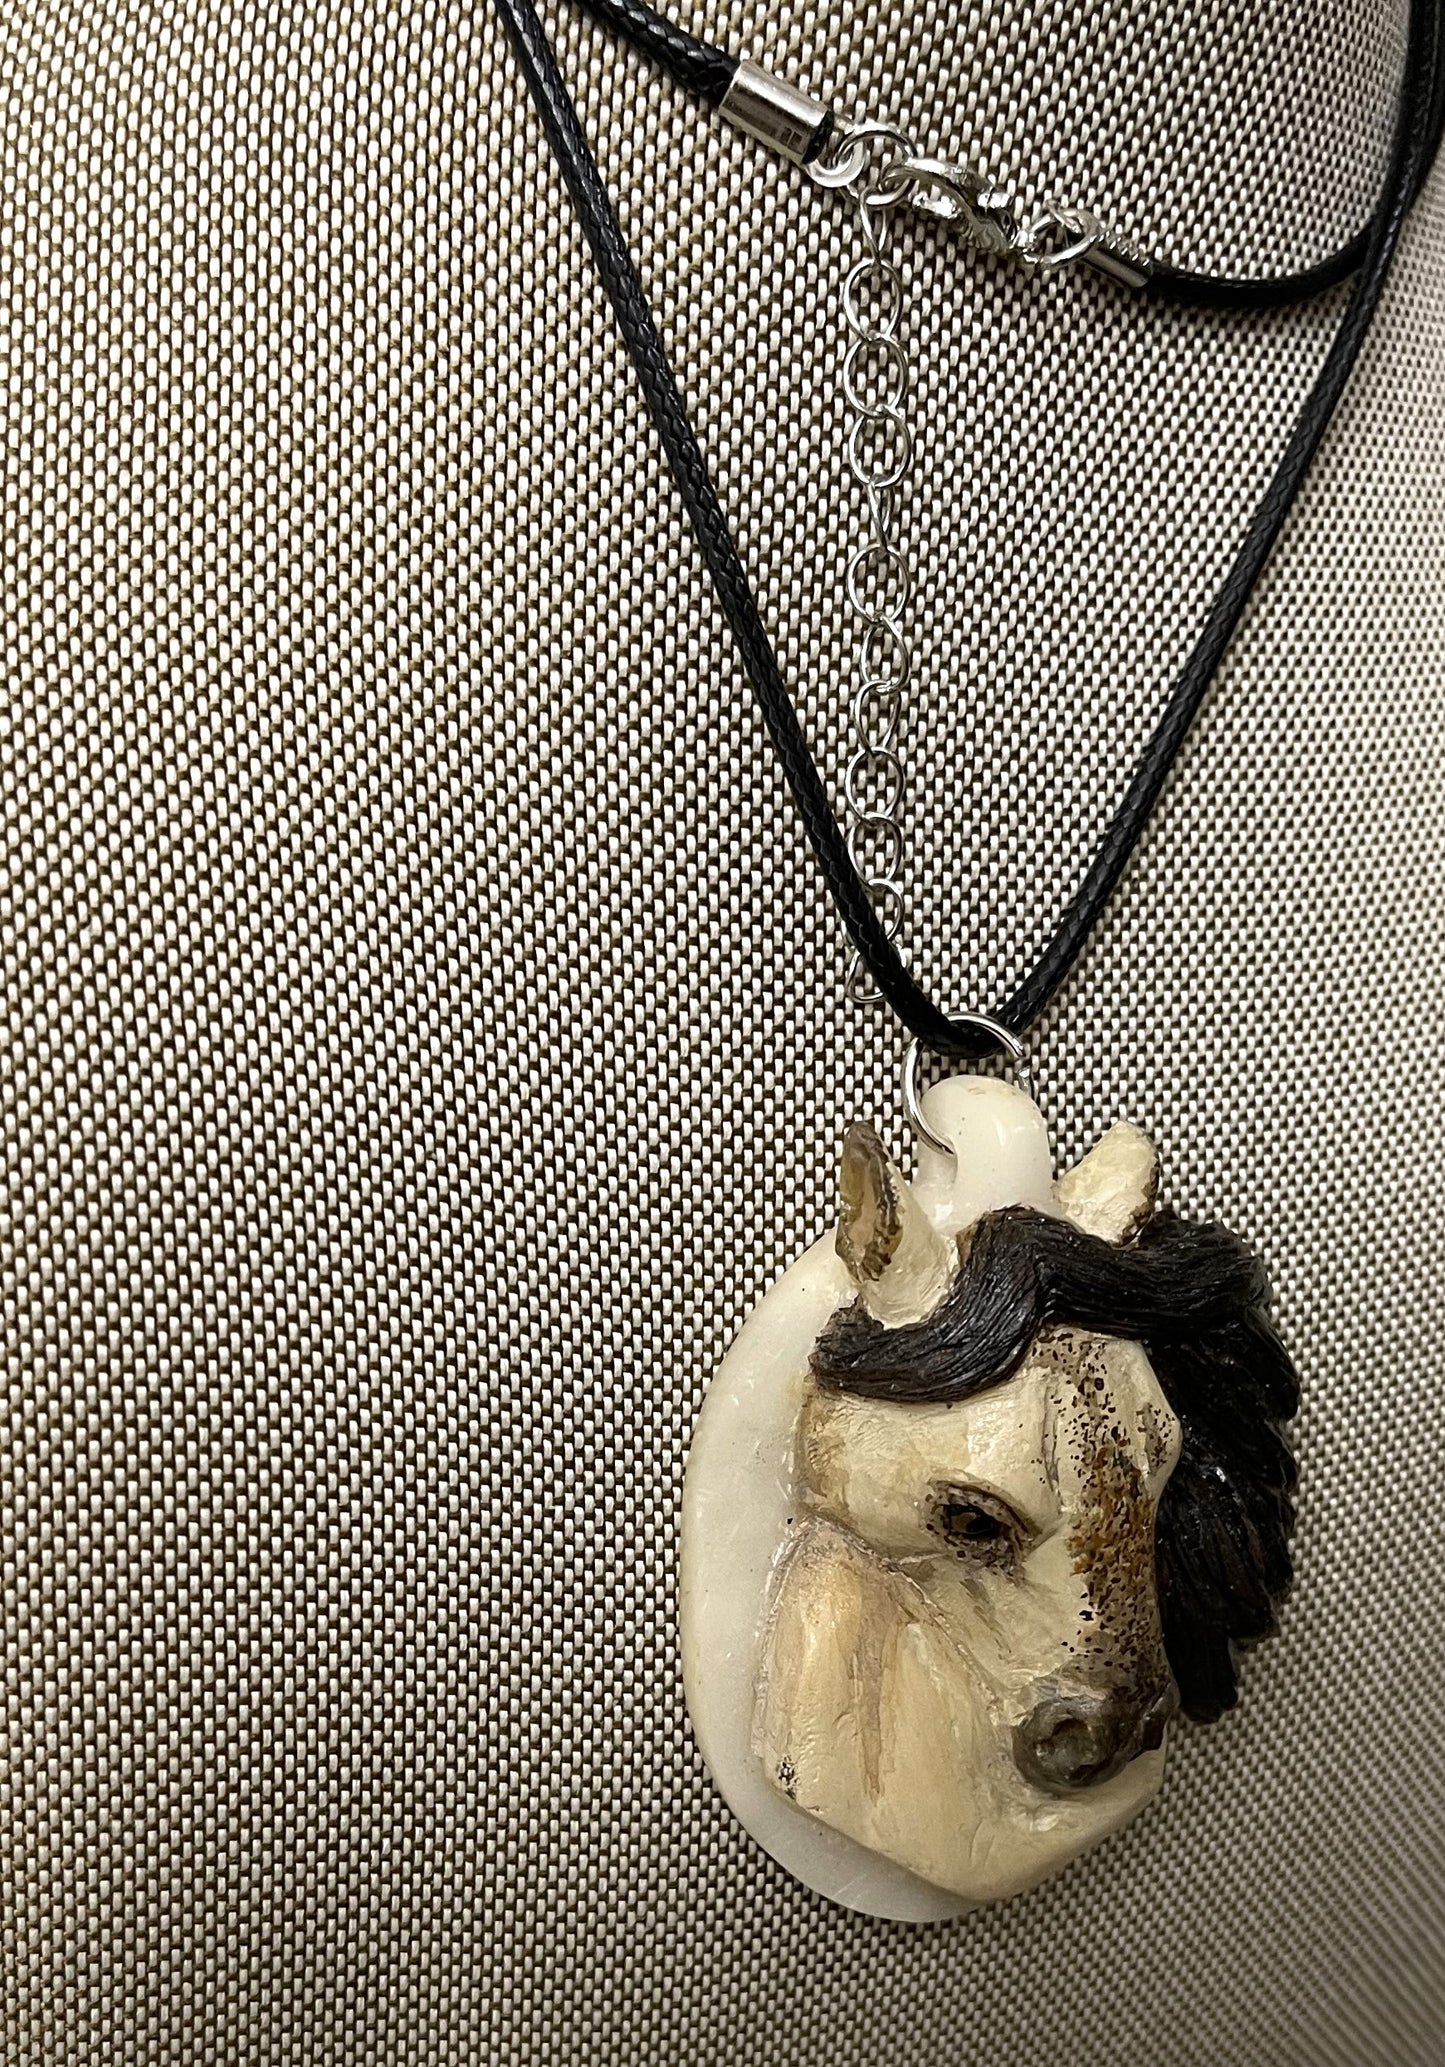 Palomino Pony Horse Carved Necklace Pendant Panama